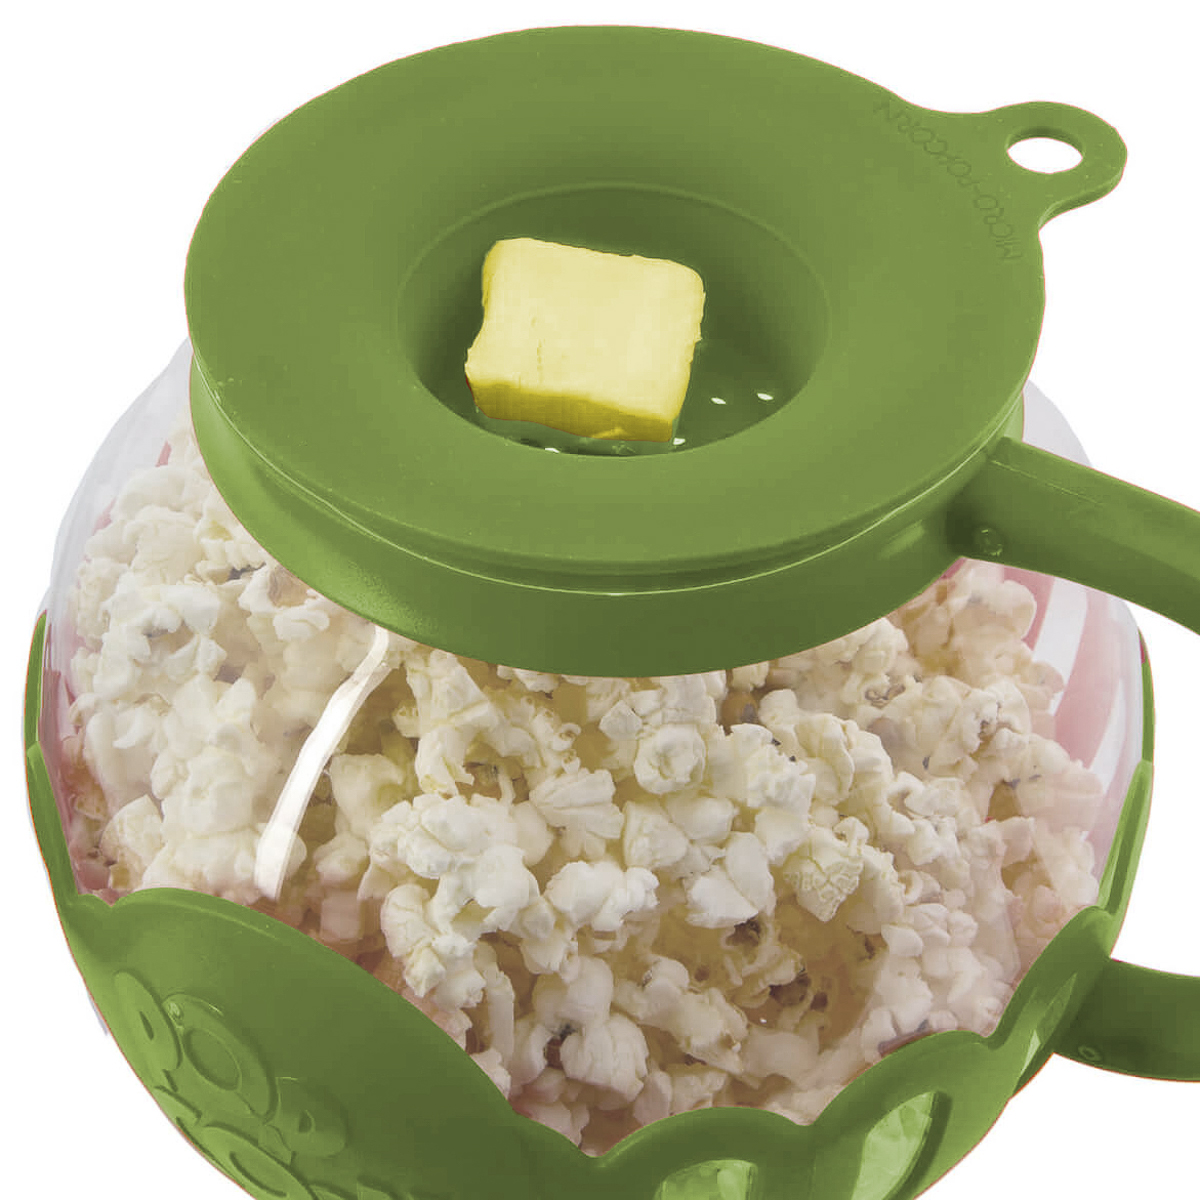 Ecolution Microwave Popcorn Popper Instructions